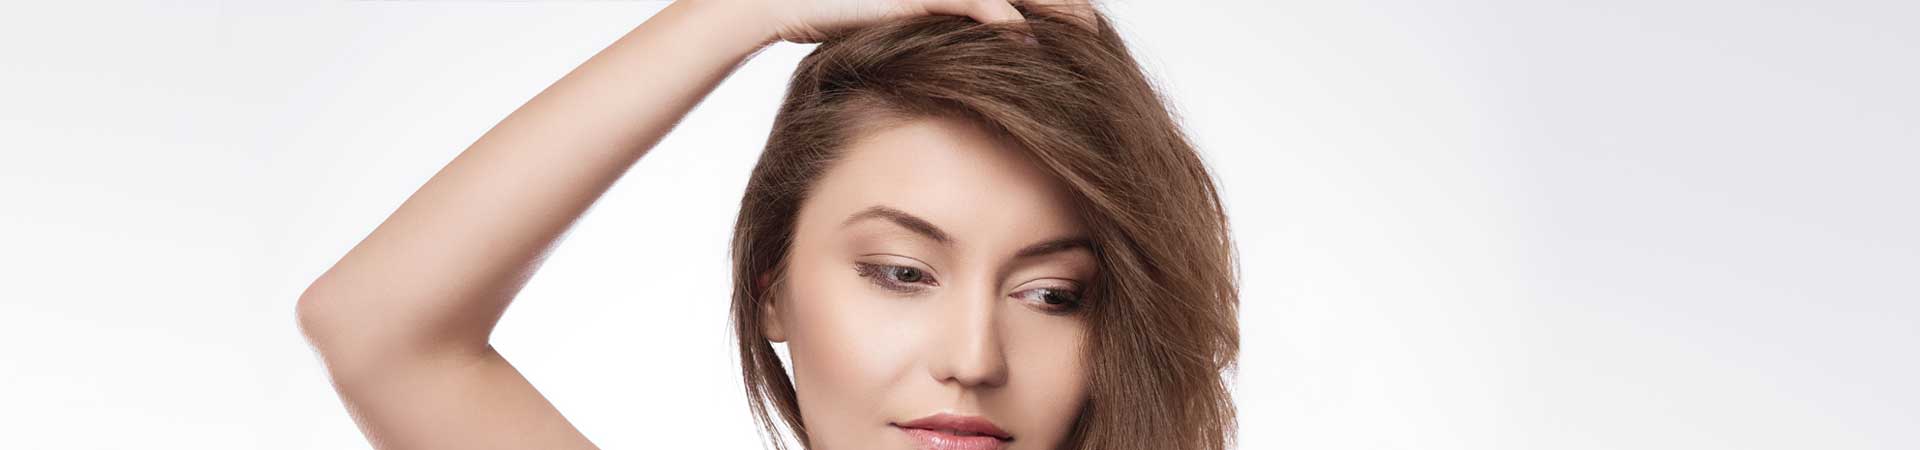 Hair Transplantation for Women